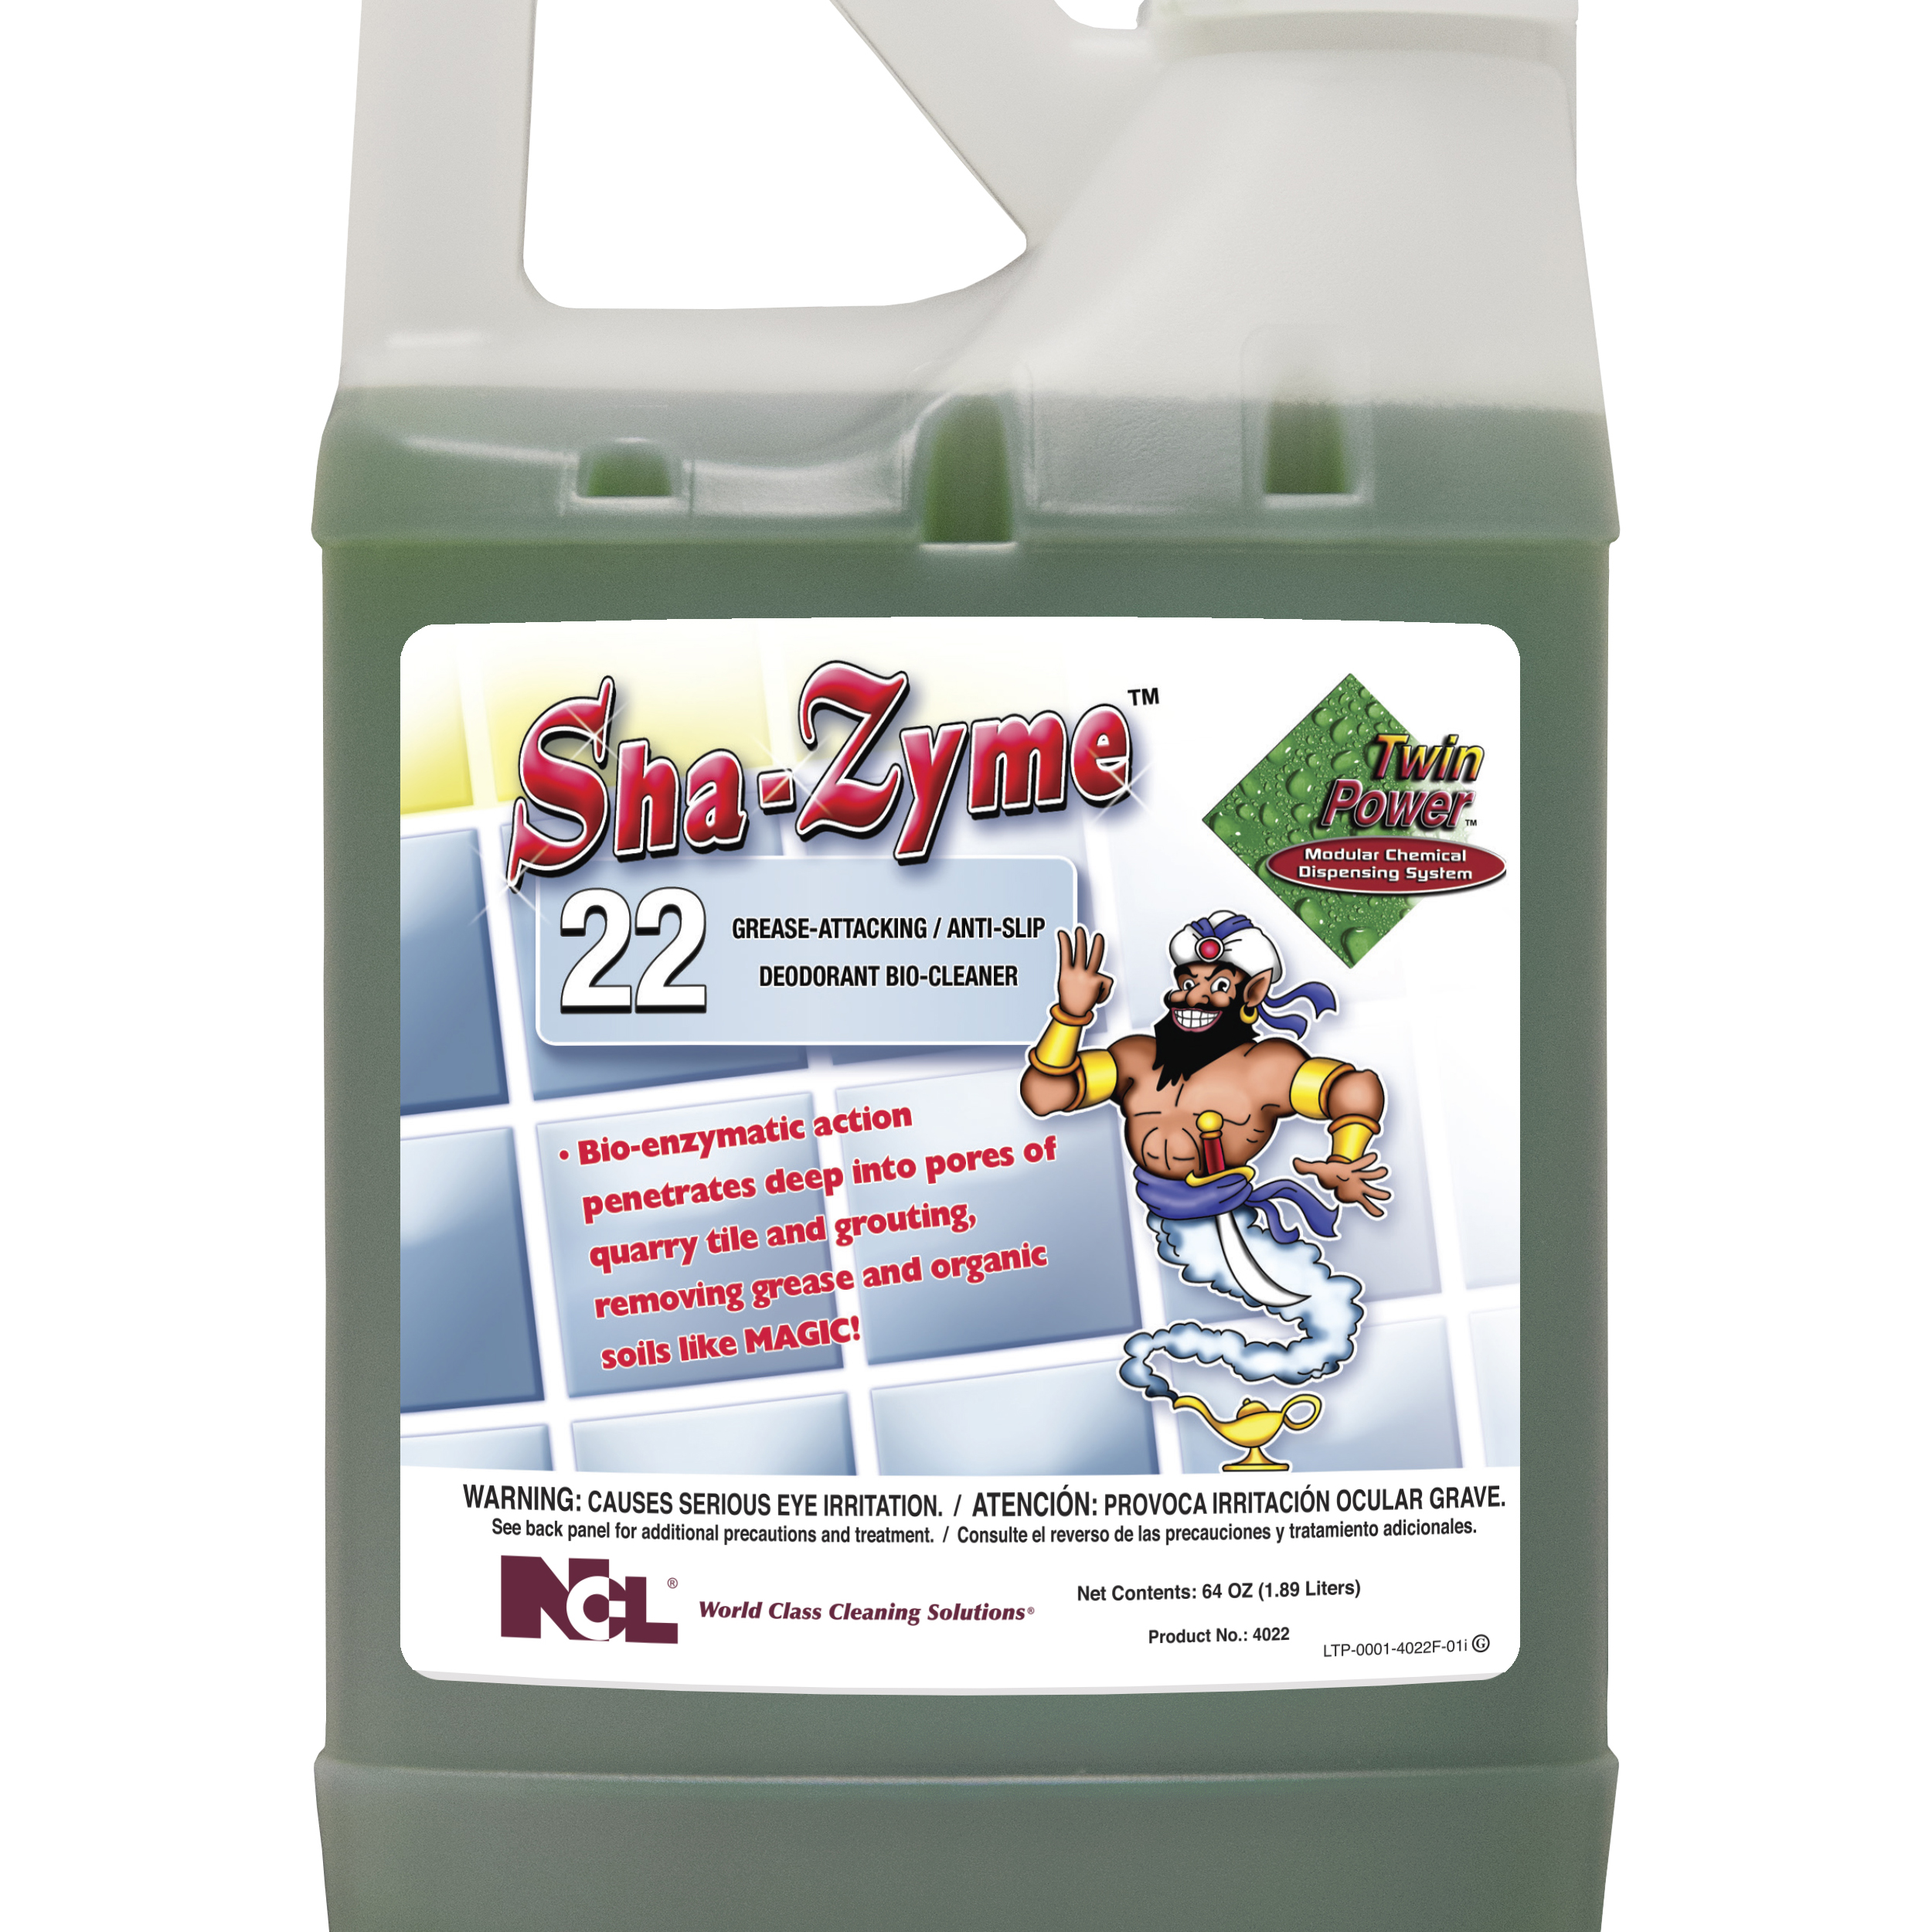  TWIN POWER #22 SHA-ZYME Deodorant Bio-Cleaner 6/64 oz Case (NCL4022-65) 